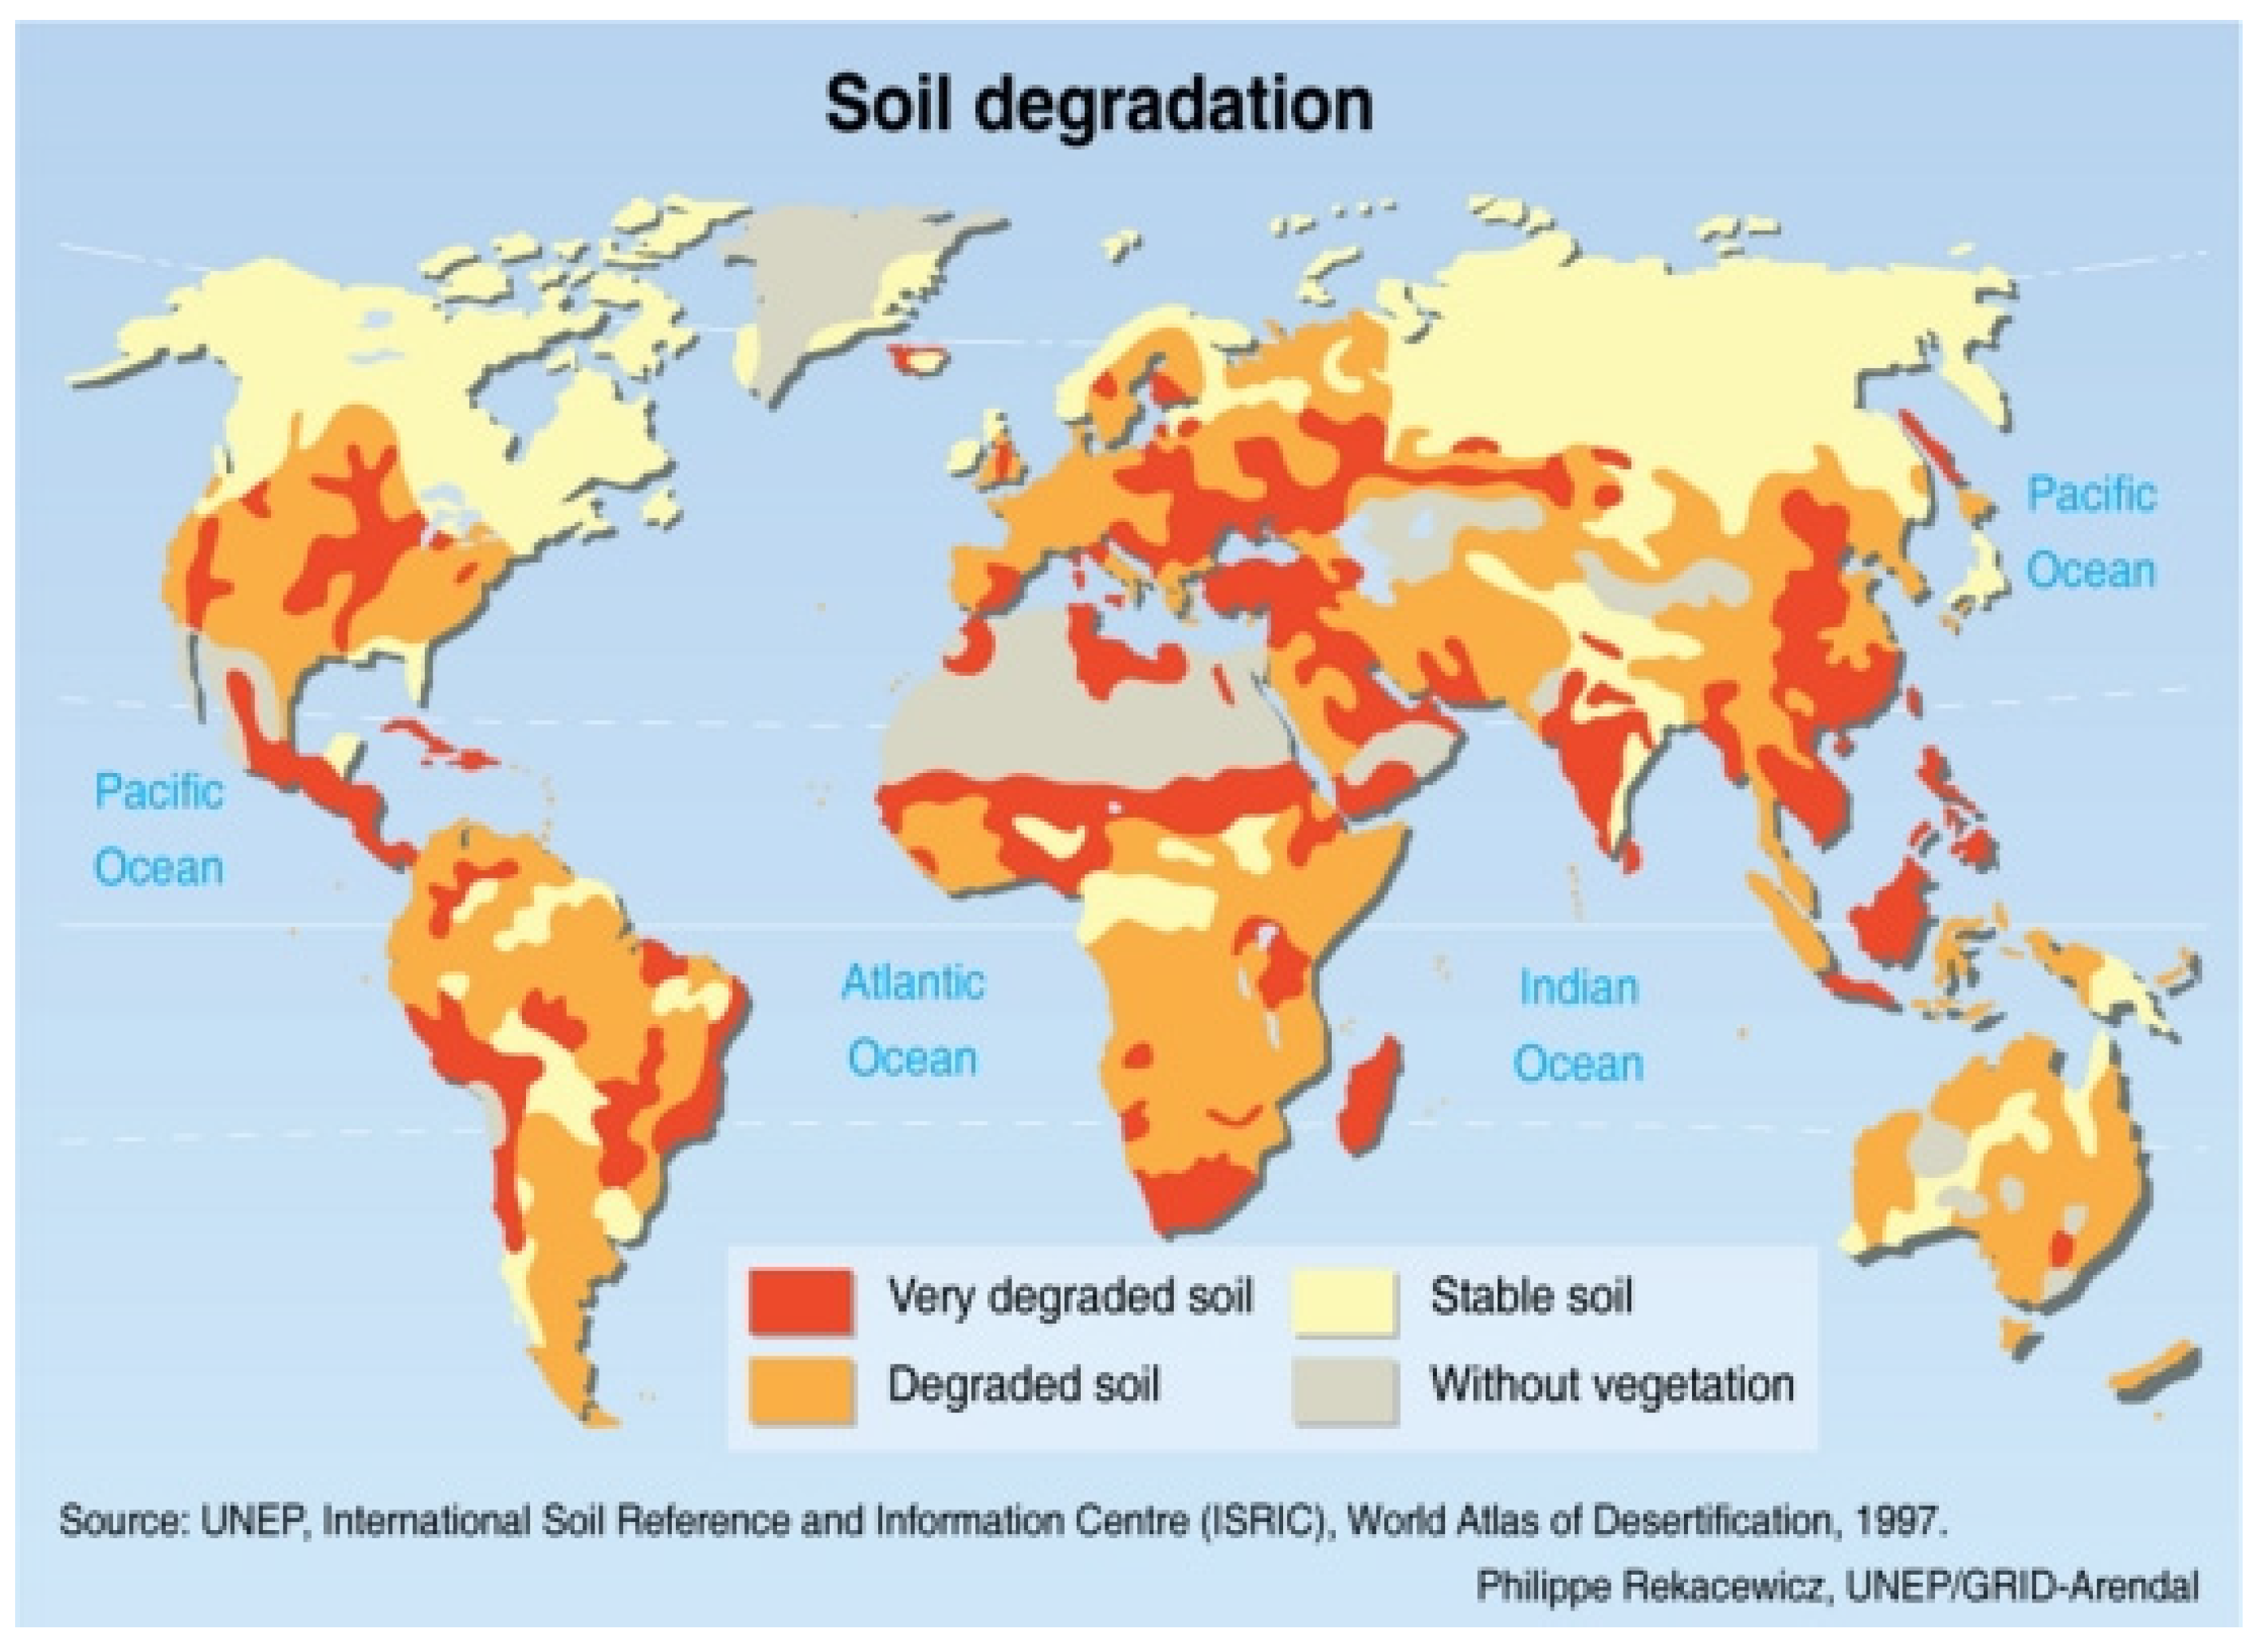 major causes of land degradation